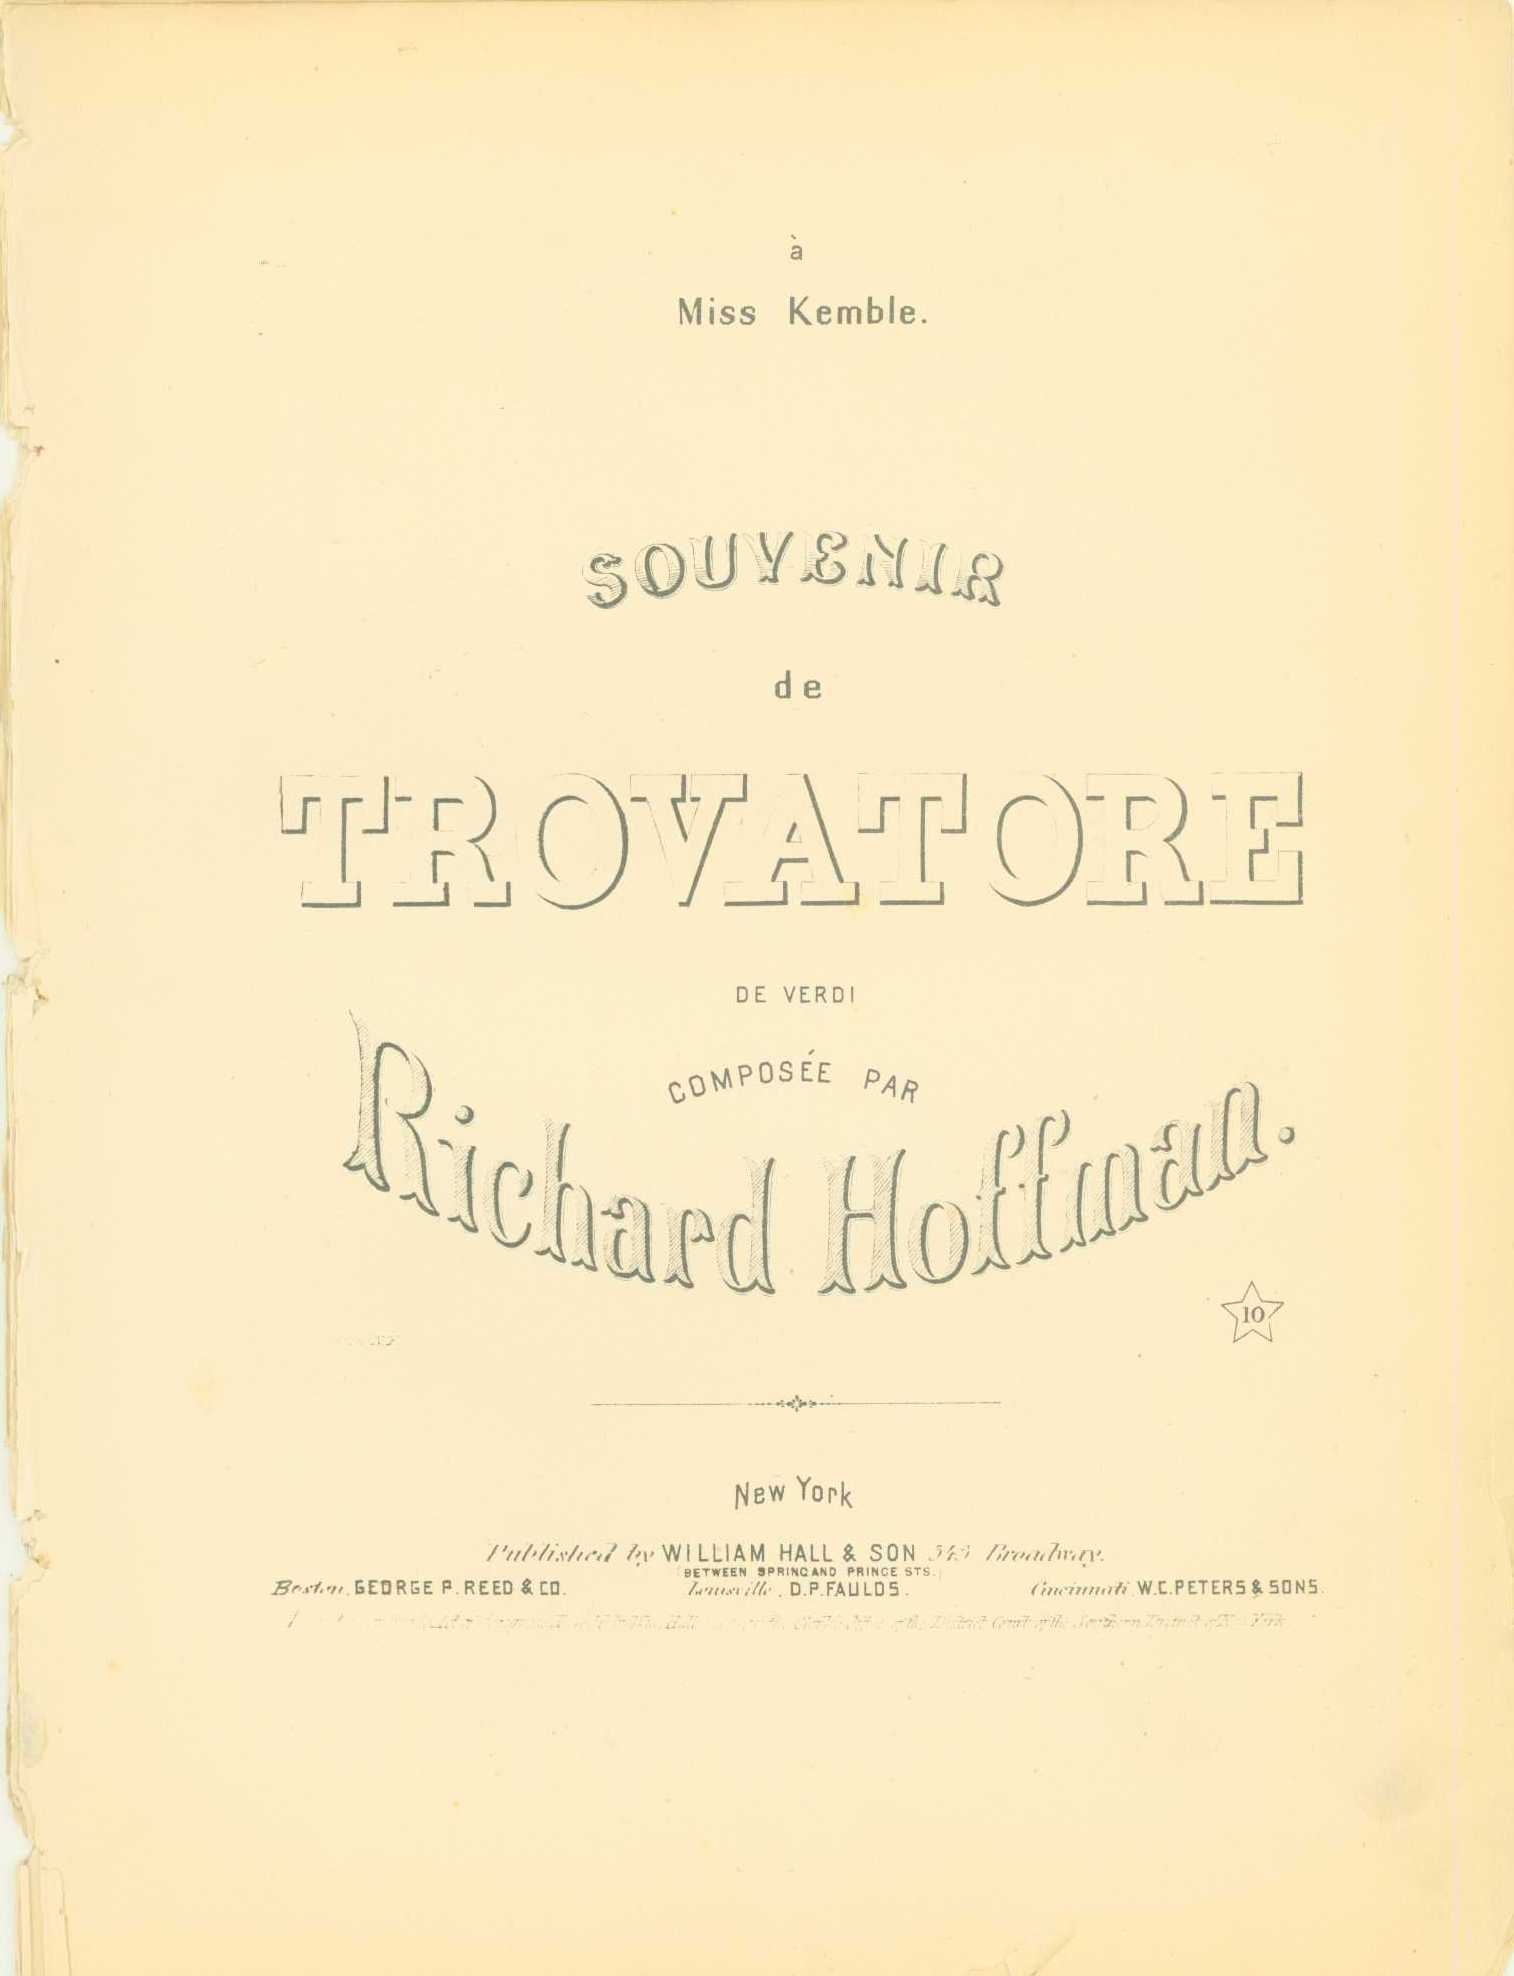 Hoffman, Richard - Souvenir de Trovatore de Verdi